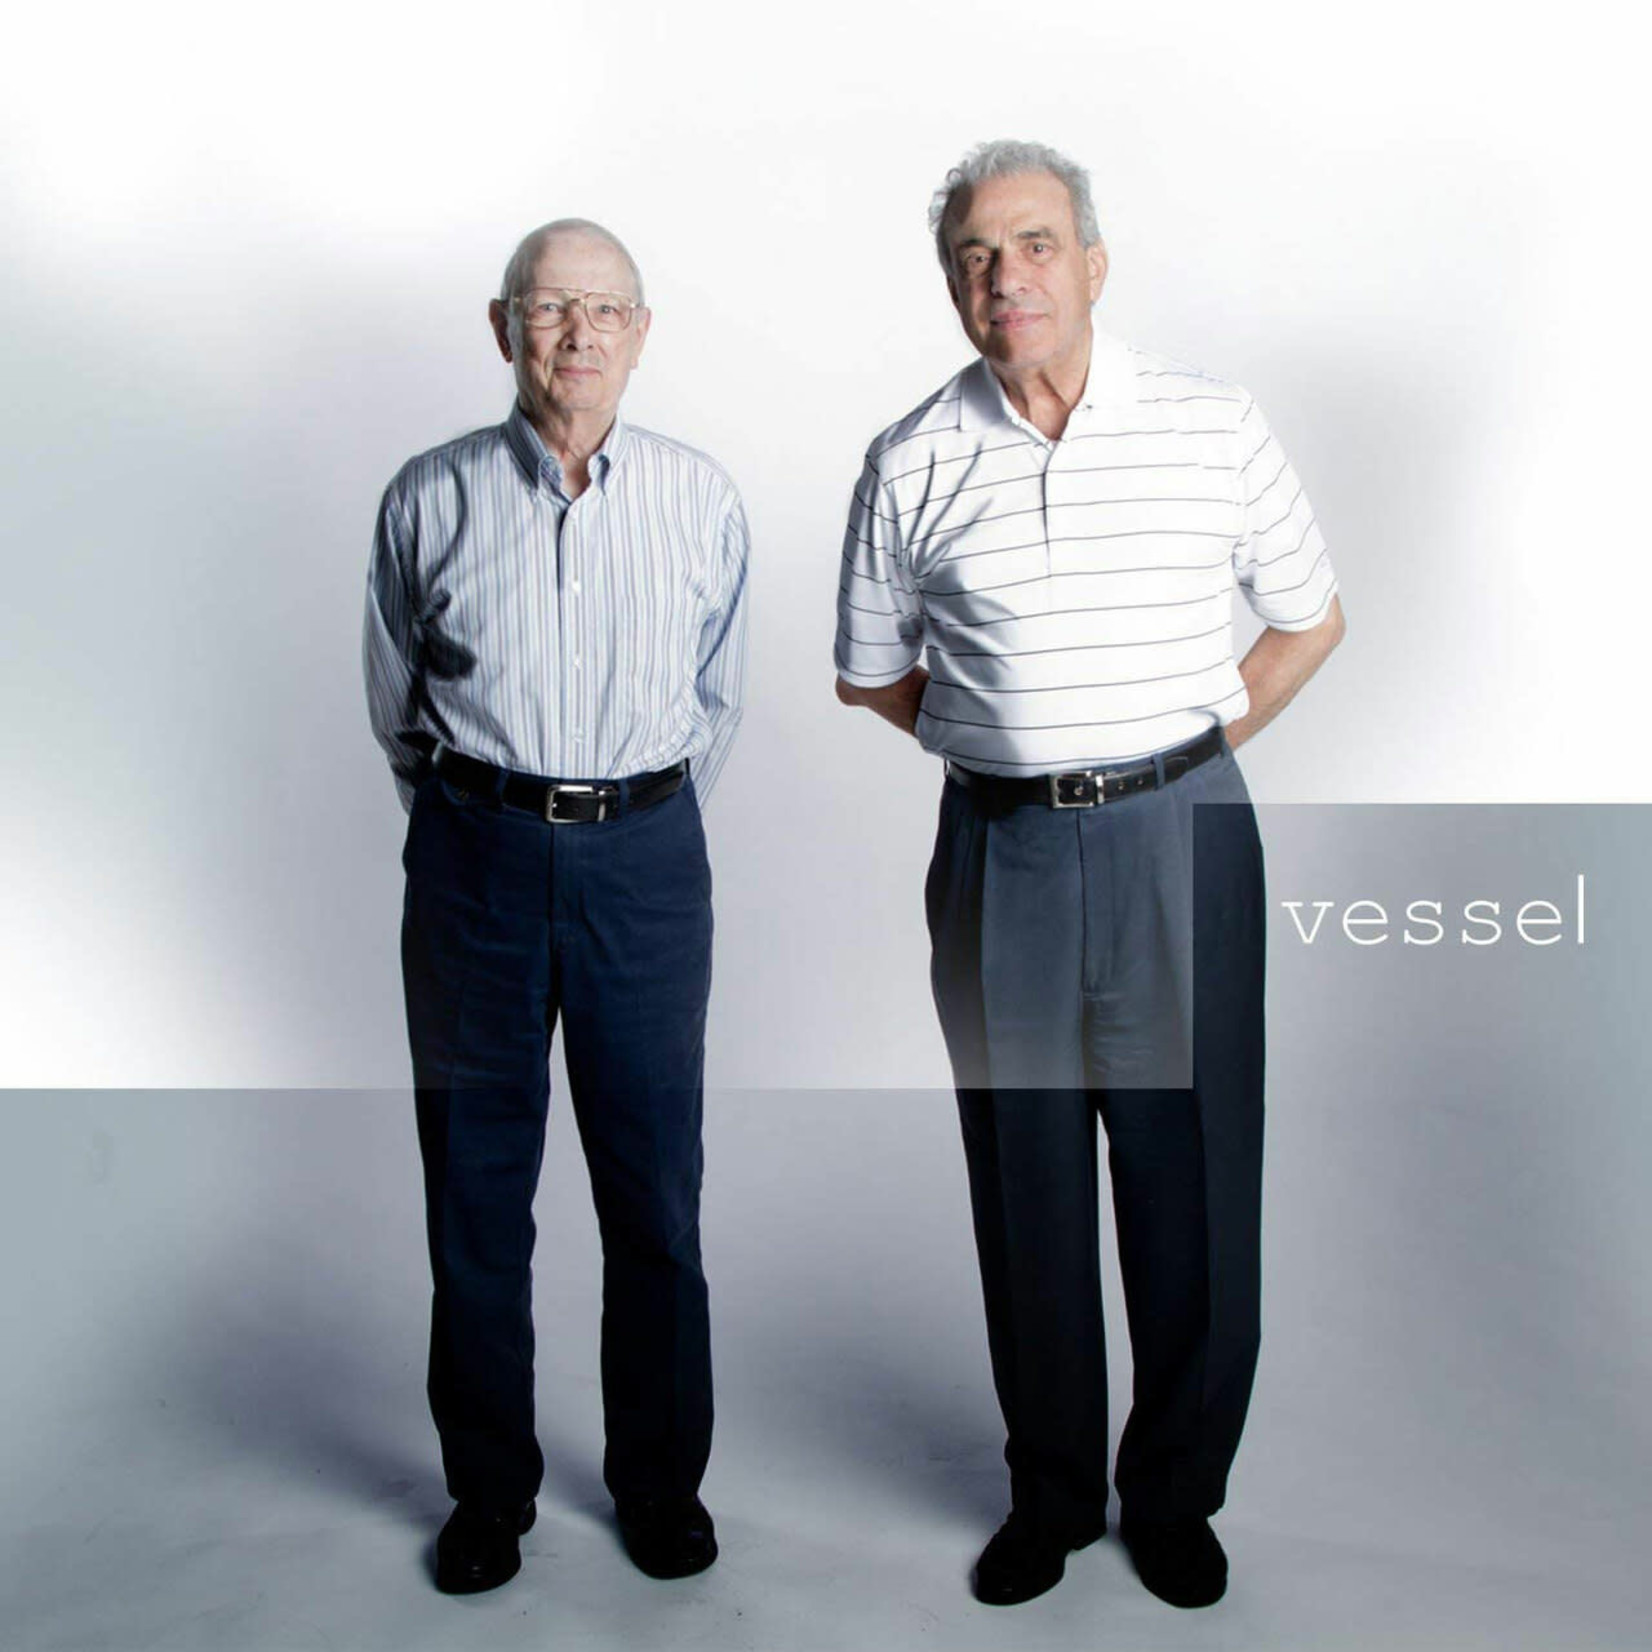 [New] Twenty One Pilots - Vessel (silver vinyl, Limited edition)